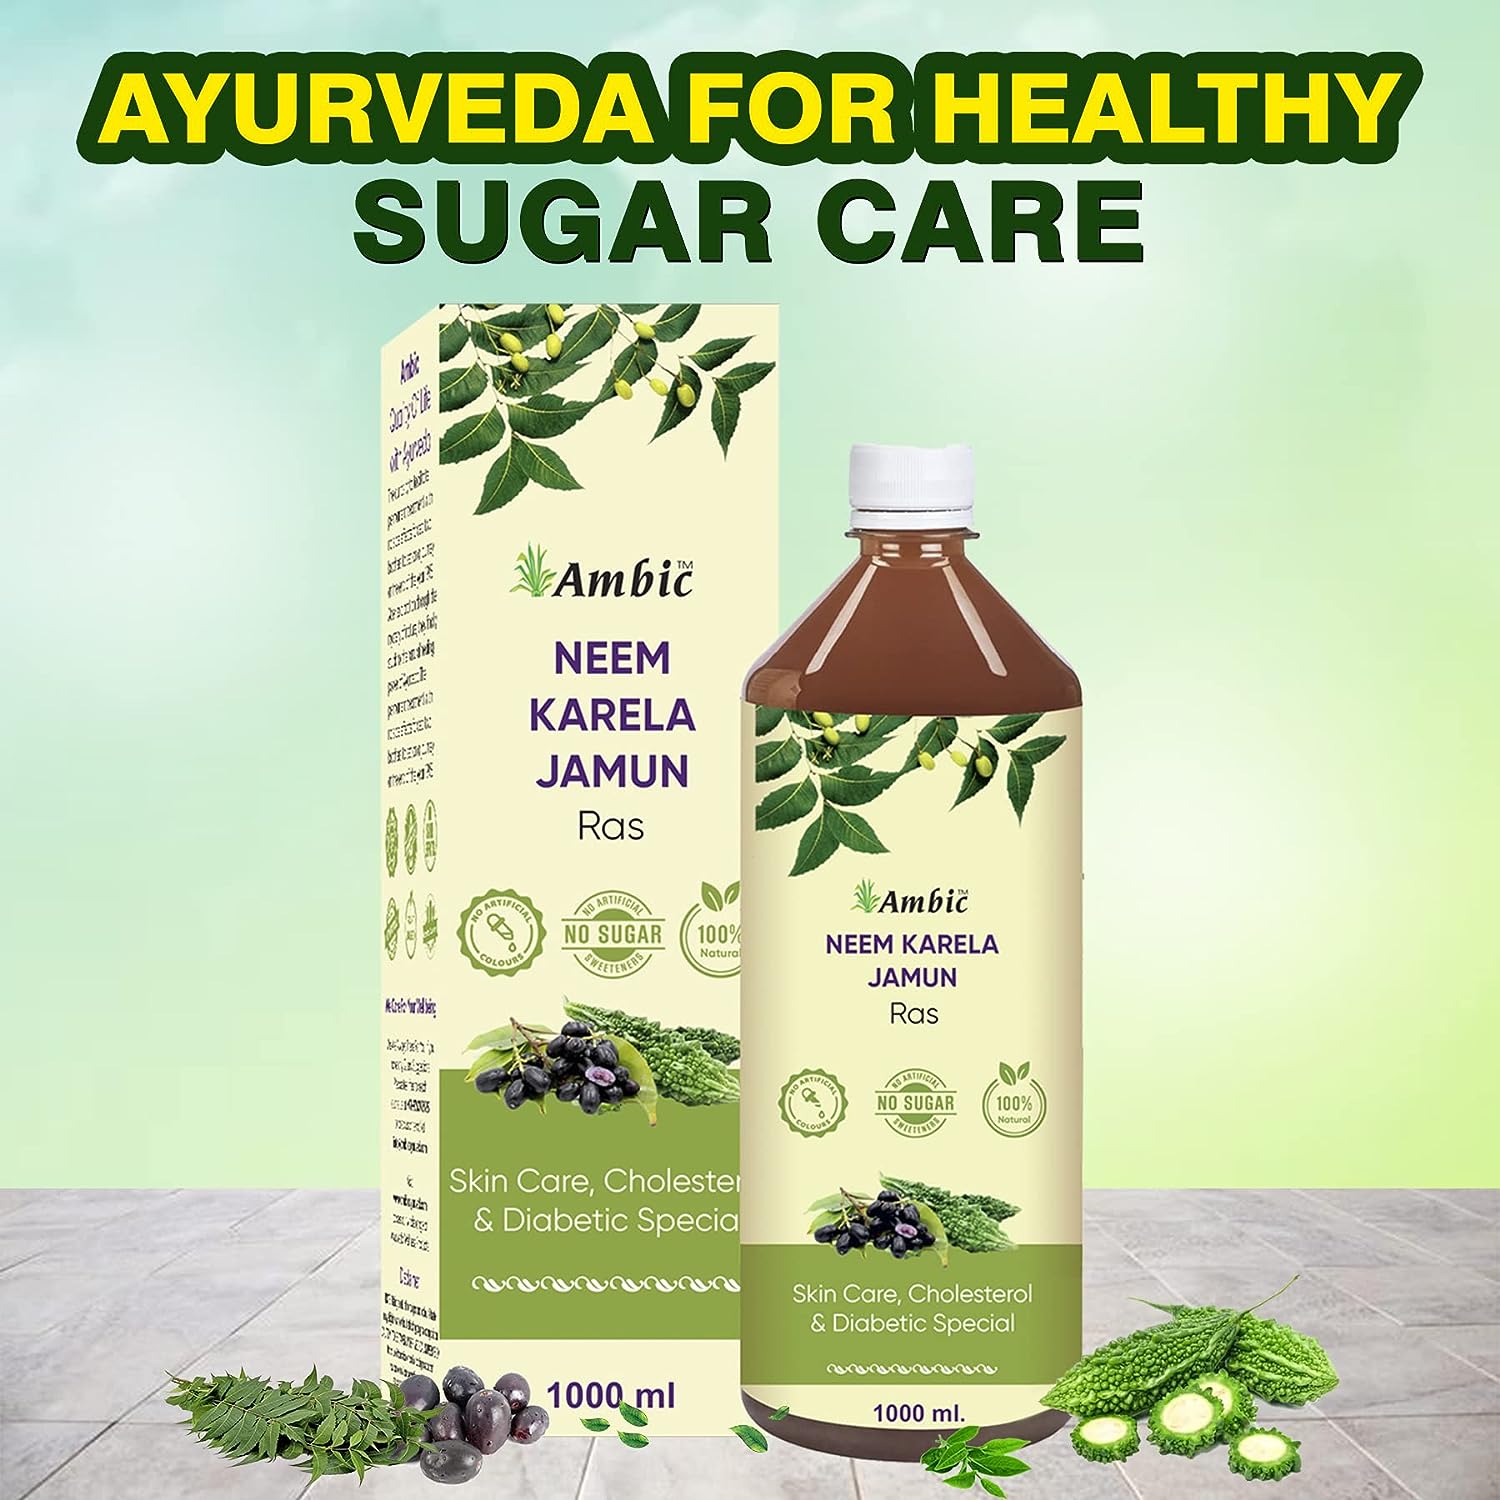 AMBIC Neem Karela Jamun Ayurvedic Juice Helps Maintain Healthy Sugar Levels I Skin & Diabetes Care 1L